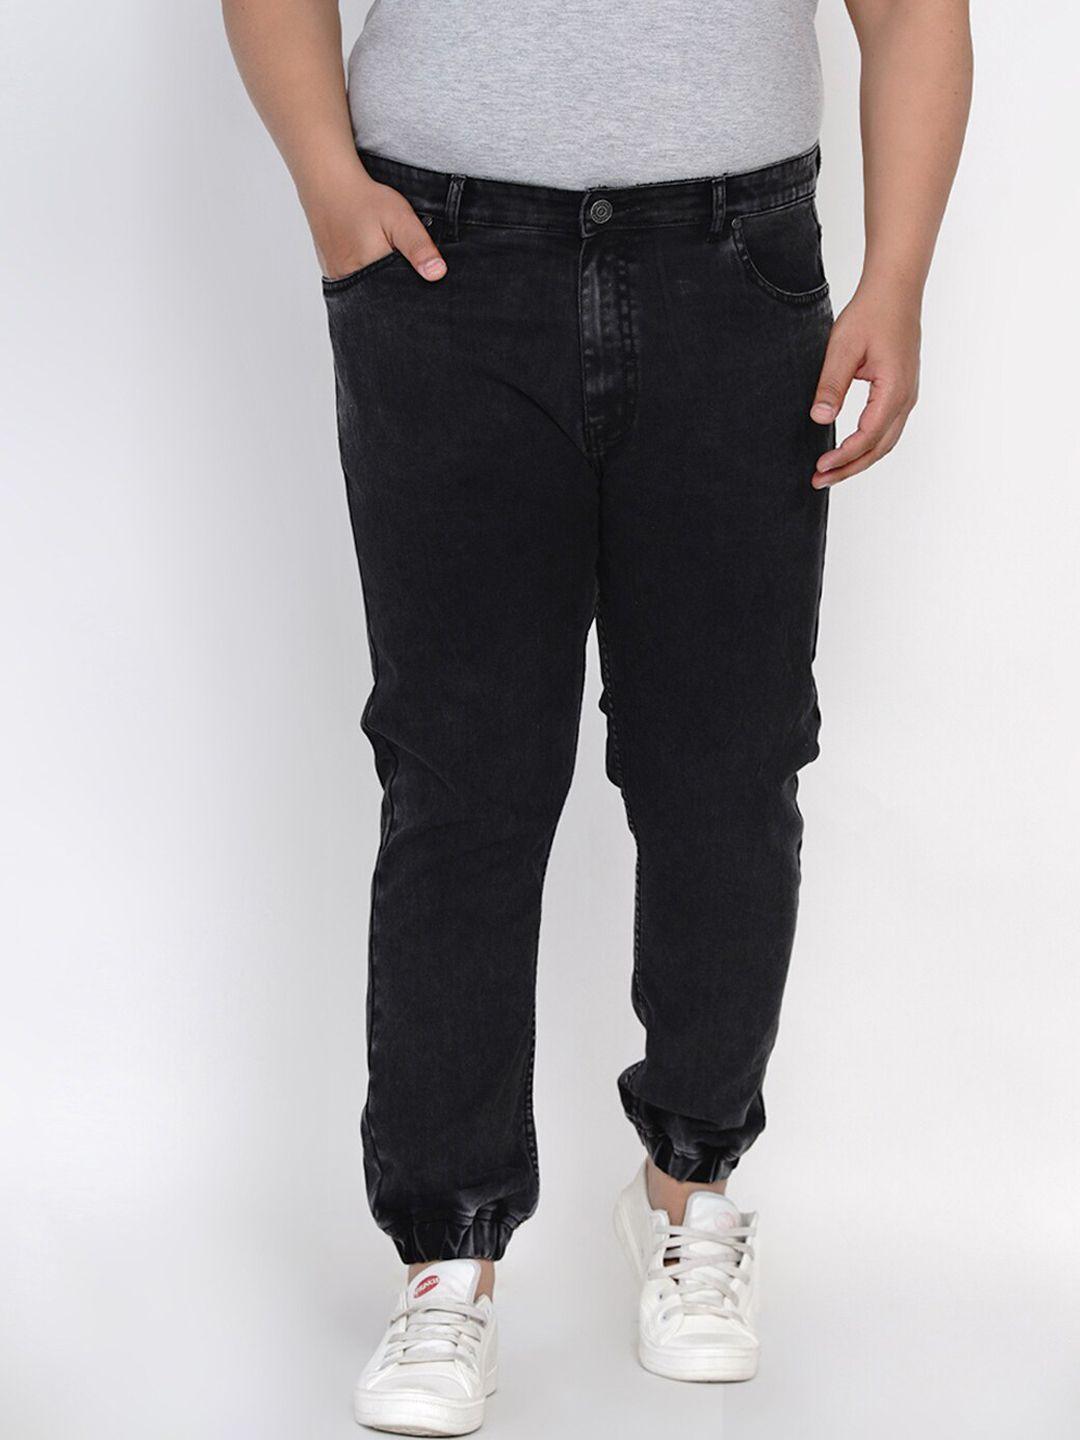 john-pride-men-black-jogger-mid-rise-clean-look-plus-size-jeans